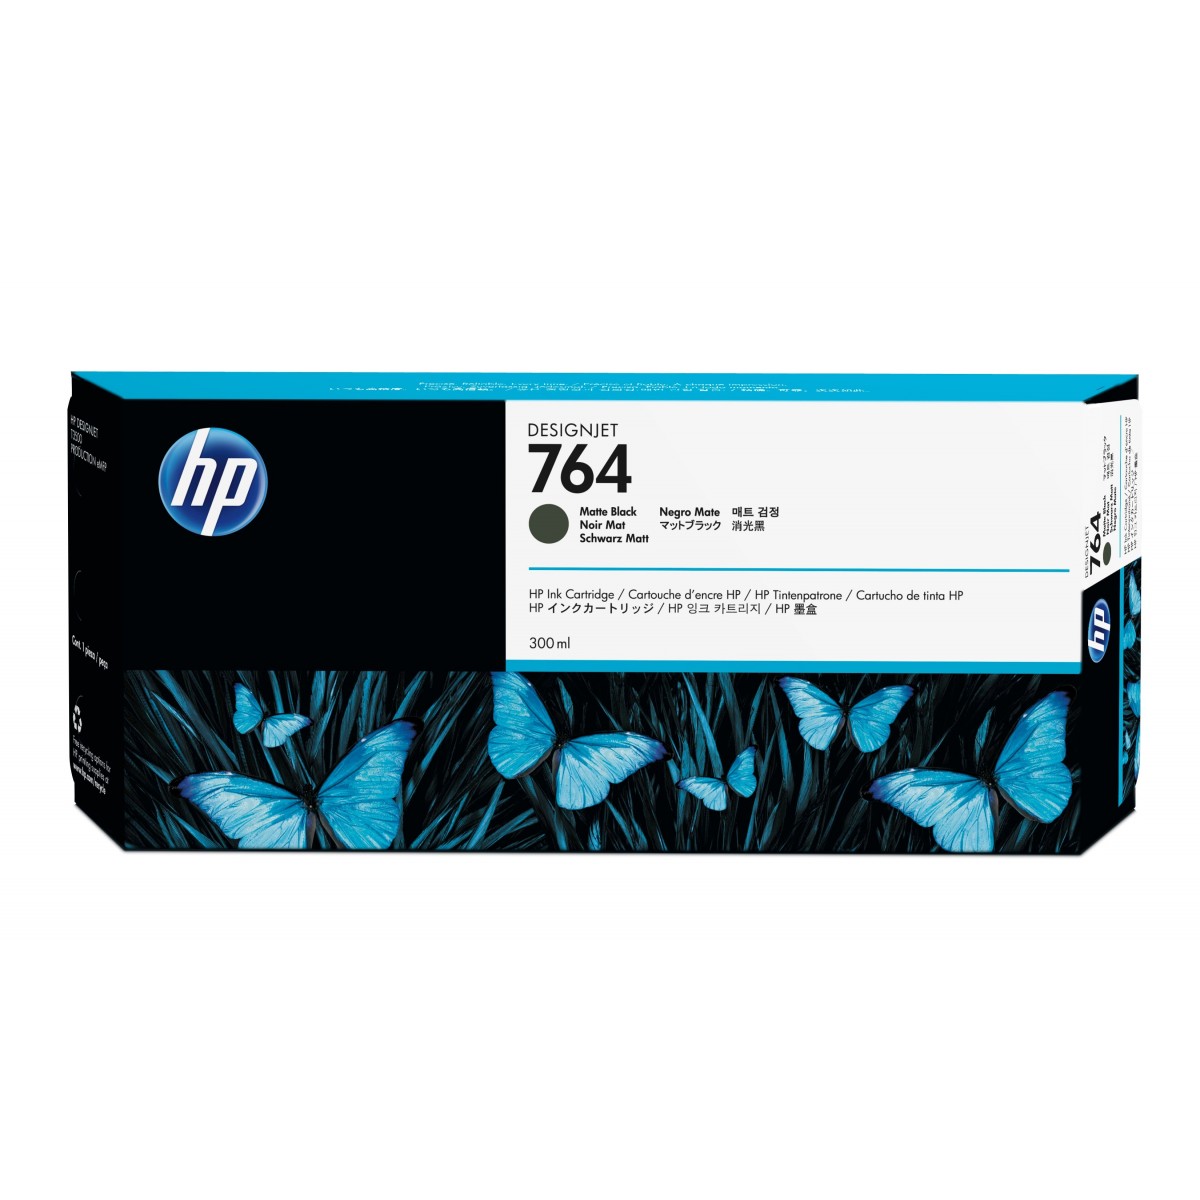 HP 764 - Original - Pigment-based ink - Matte black - HP - HP DesignJet T3500 - 1 pc(s)